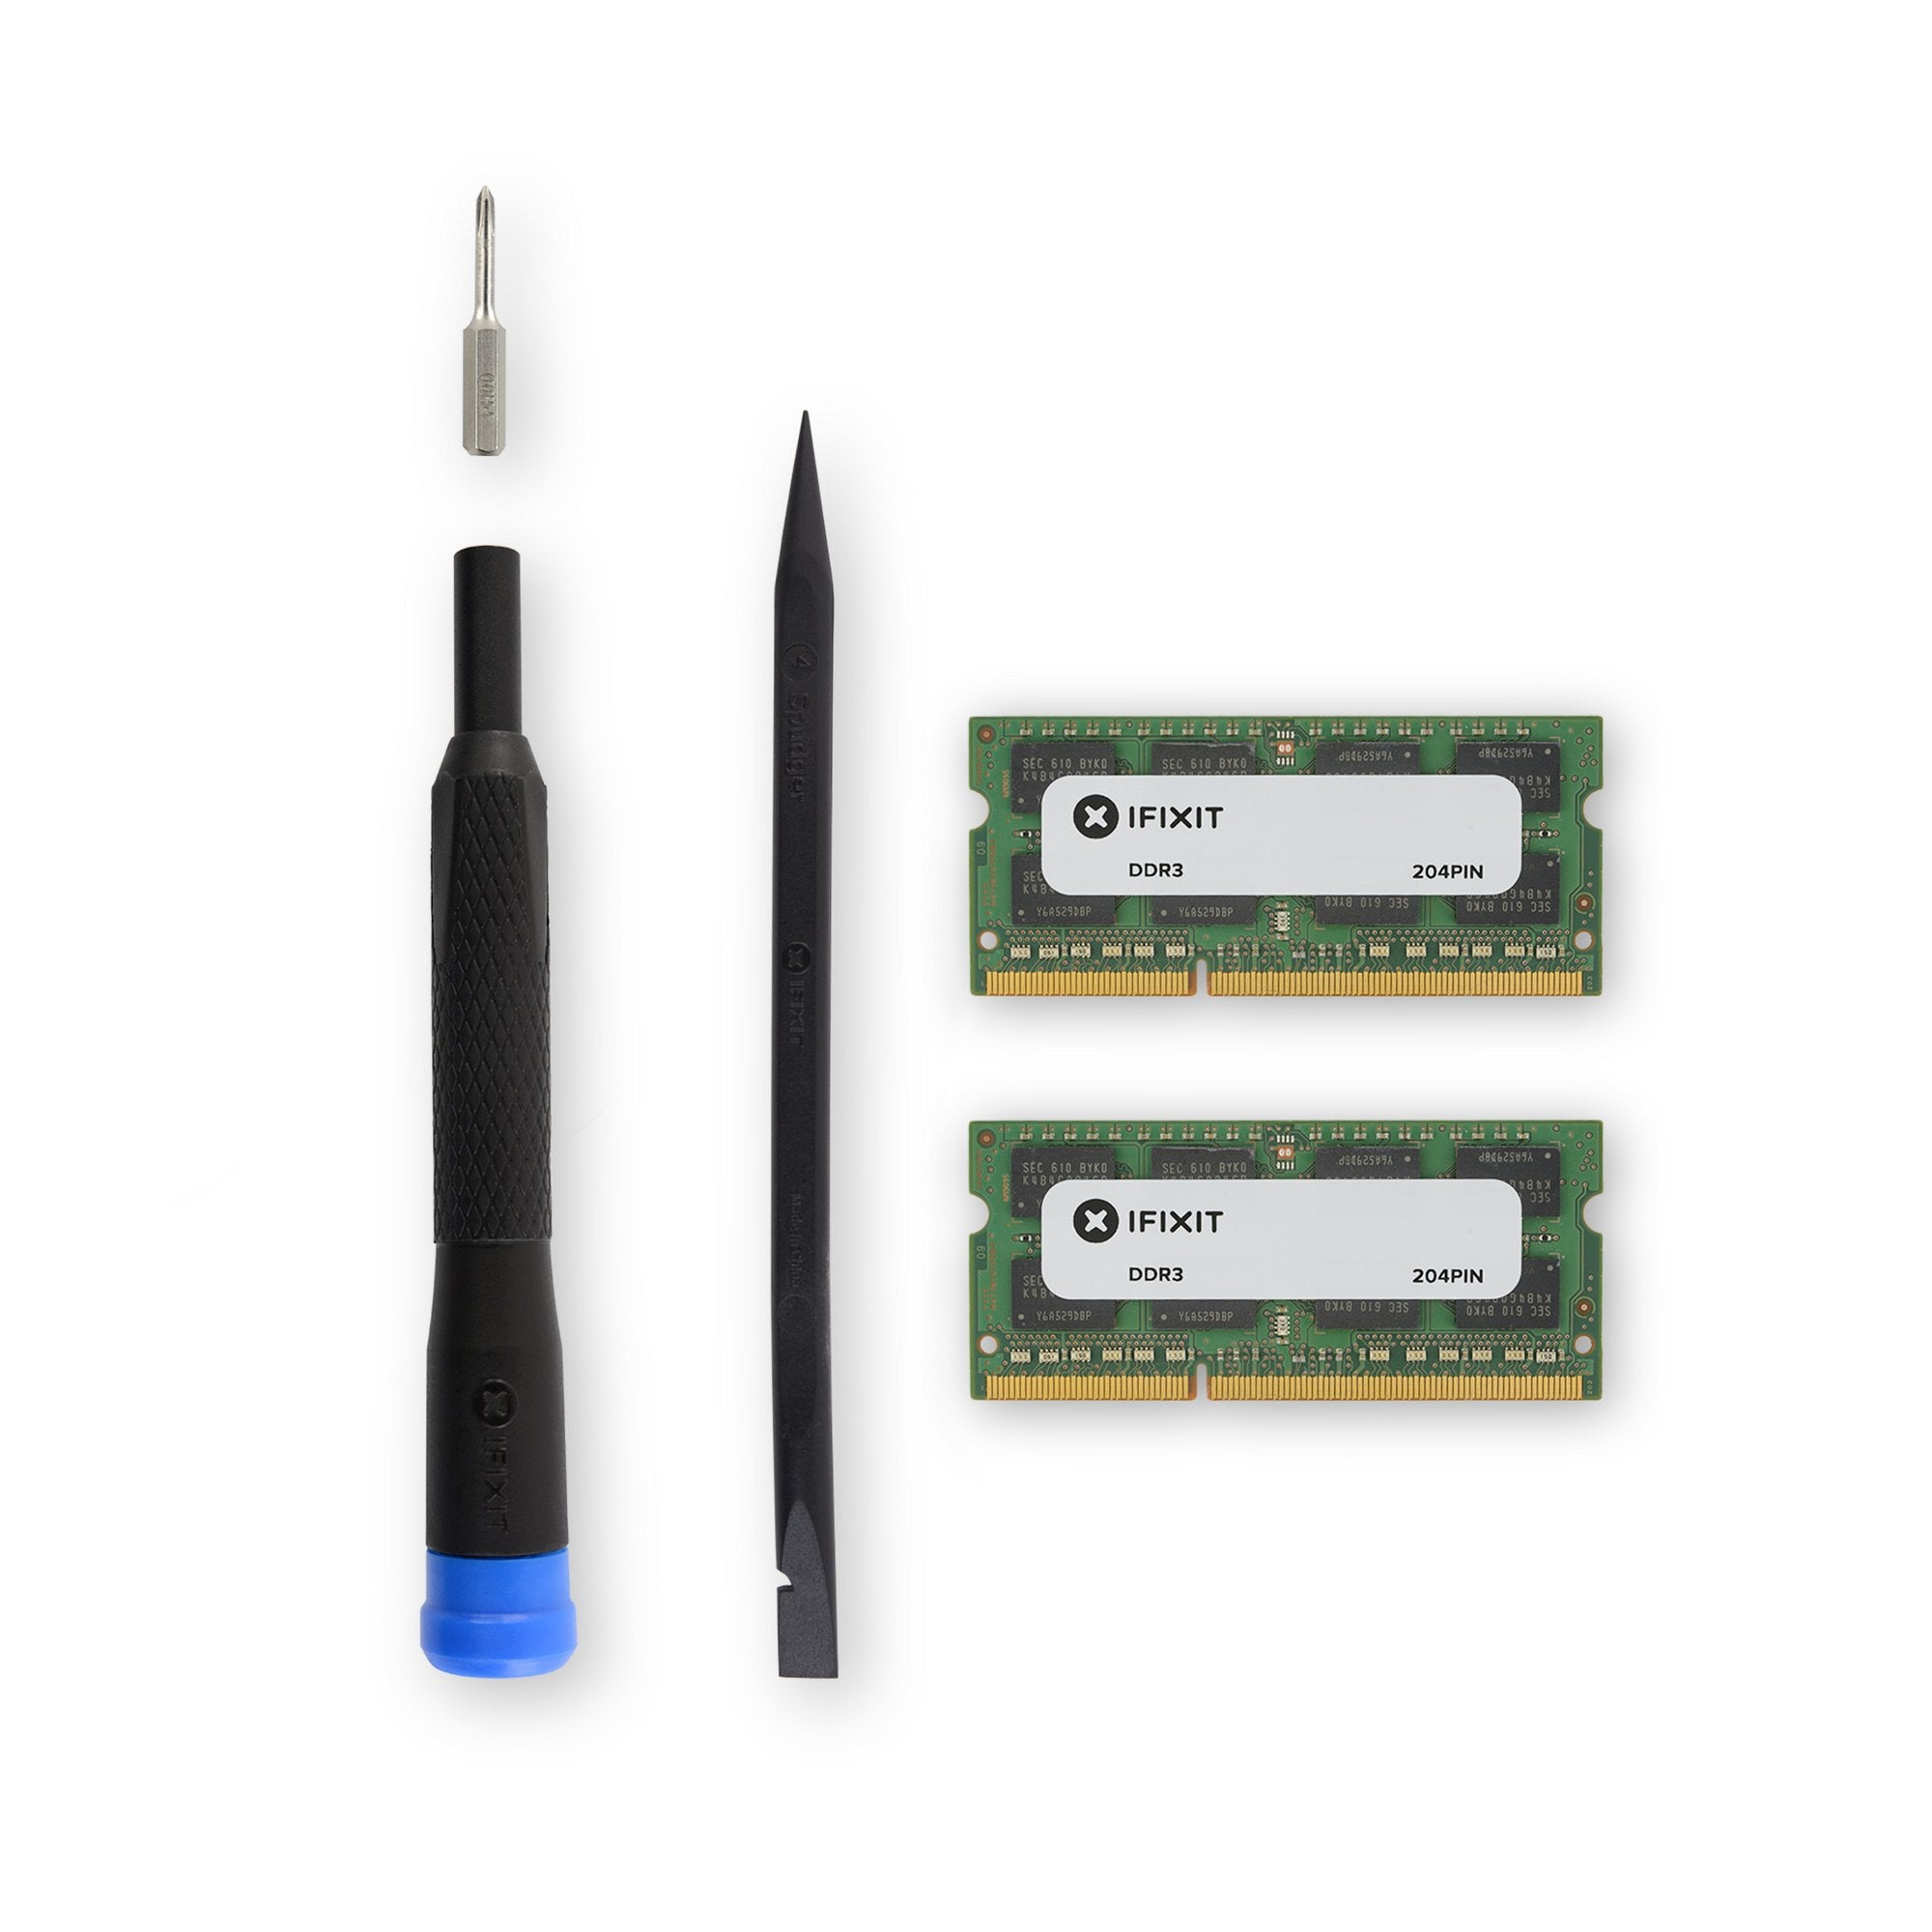 MacBook Pro 17" Unibody (Early 2011) Memory Maxxer RAM Upgrade Kit